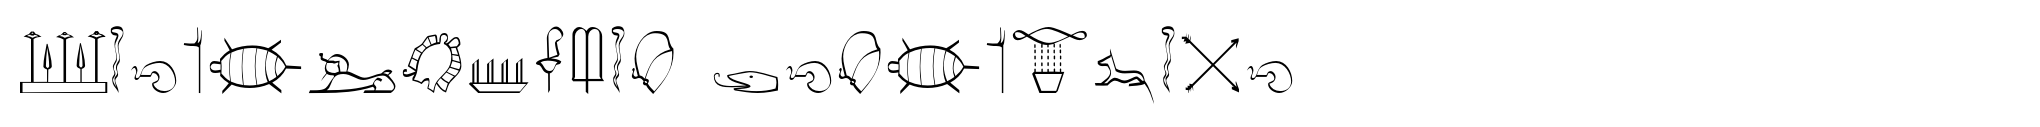 Hieroglyphic Decorative image